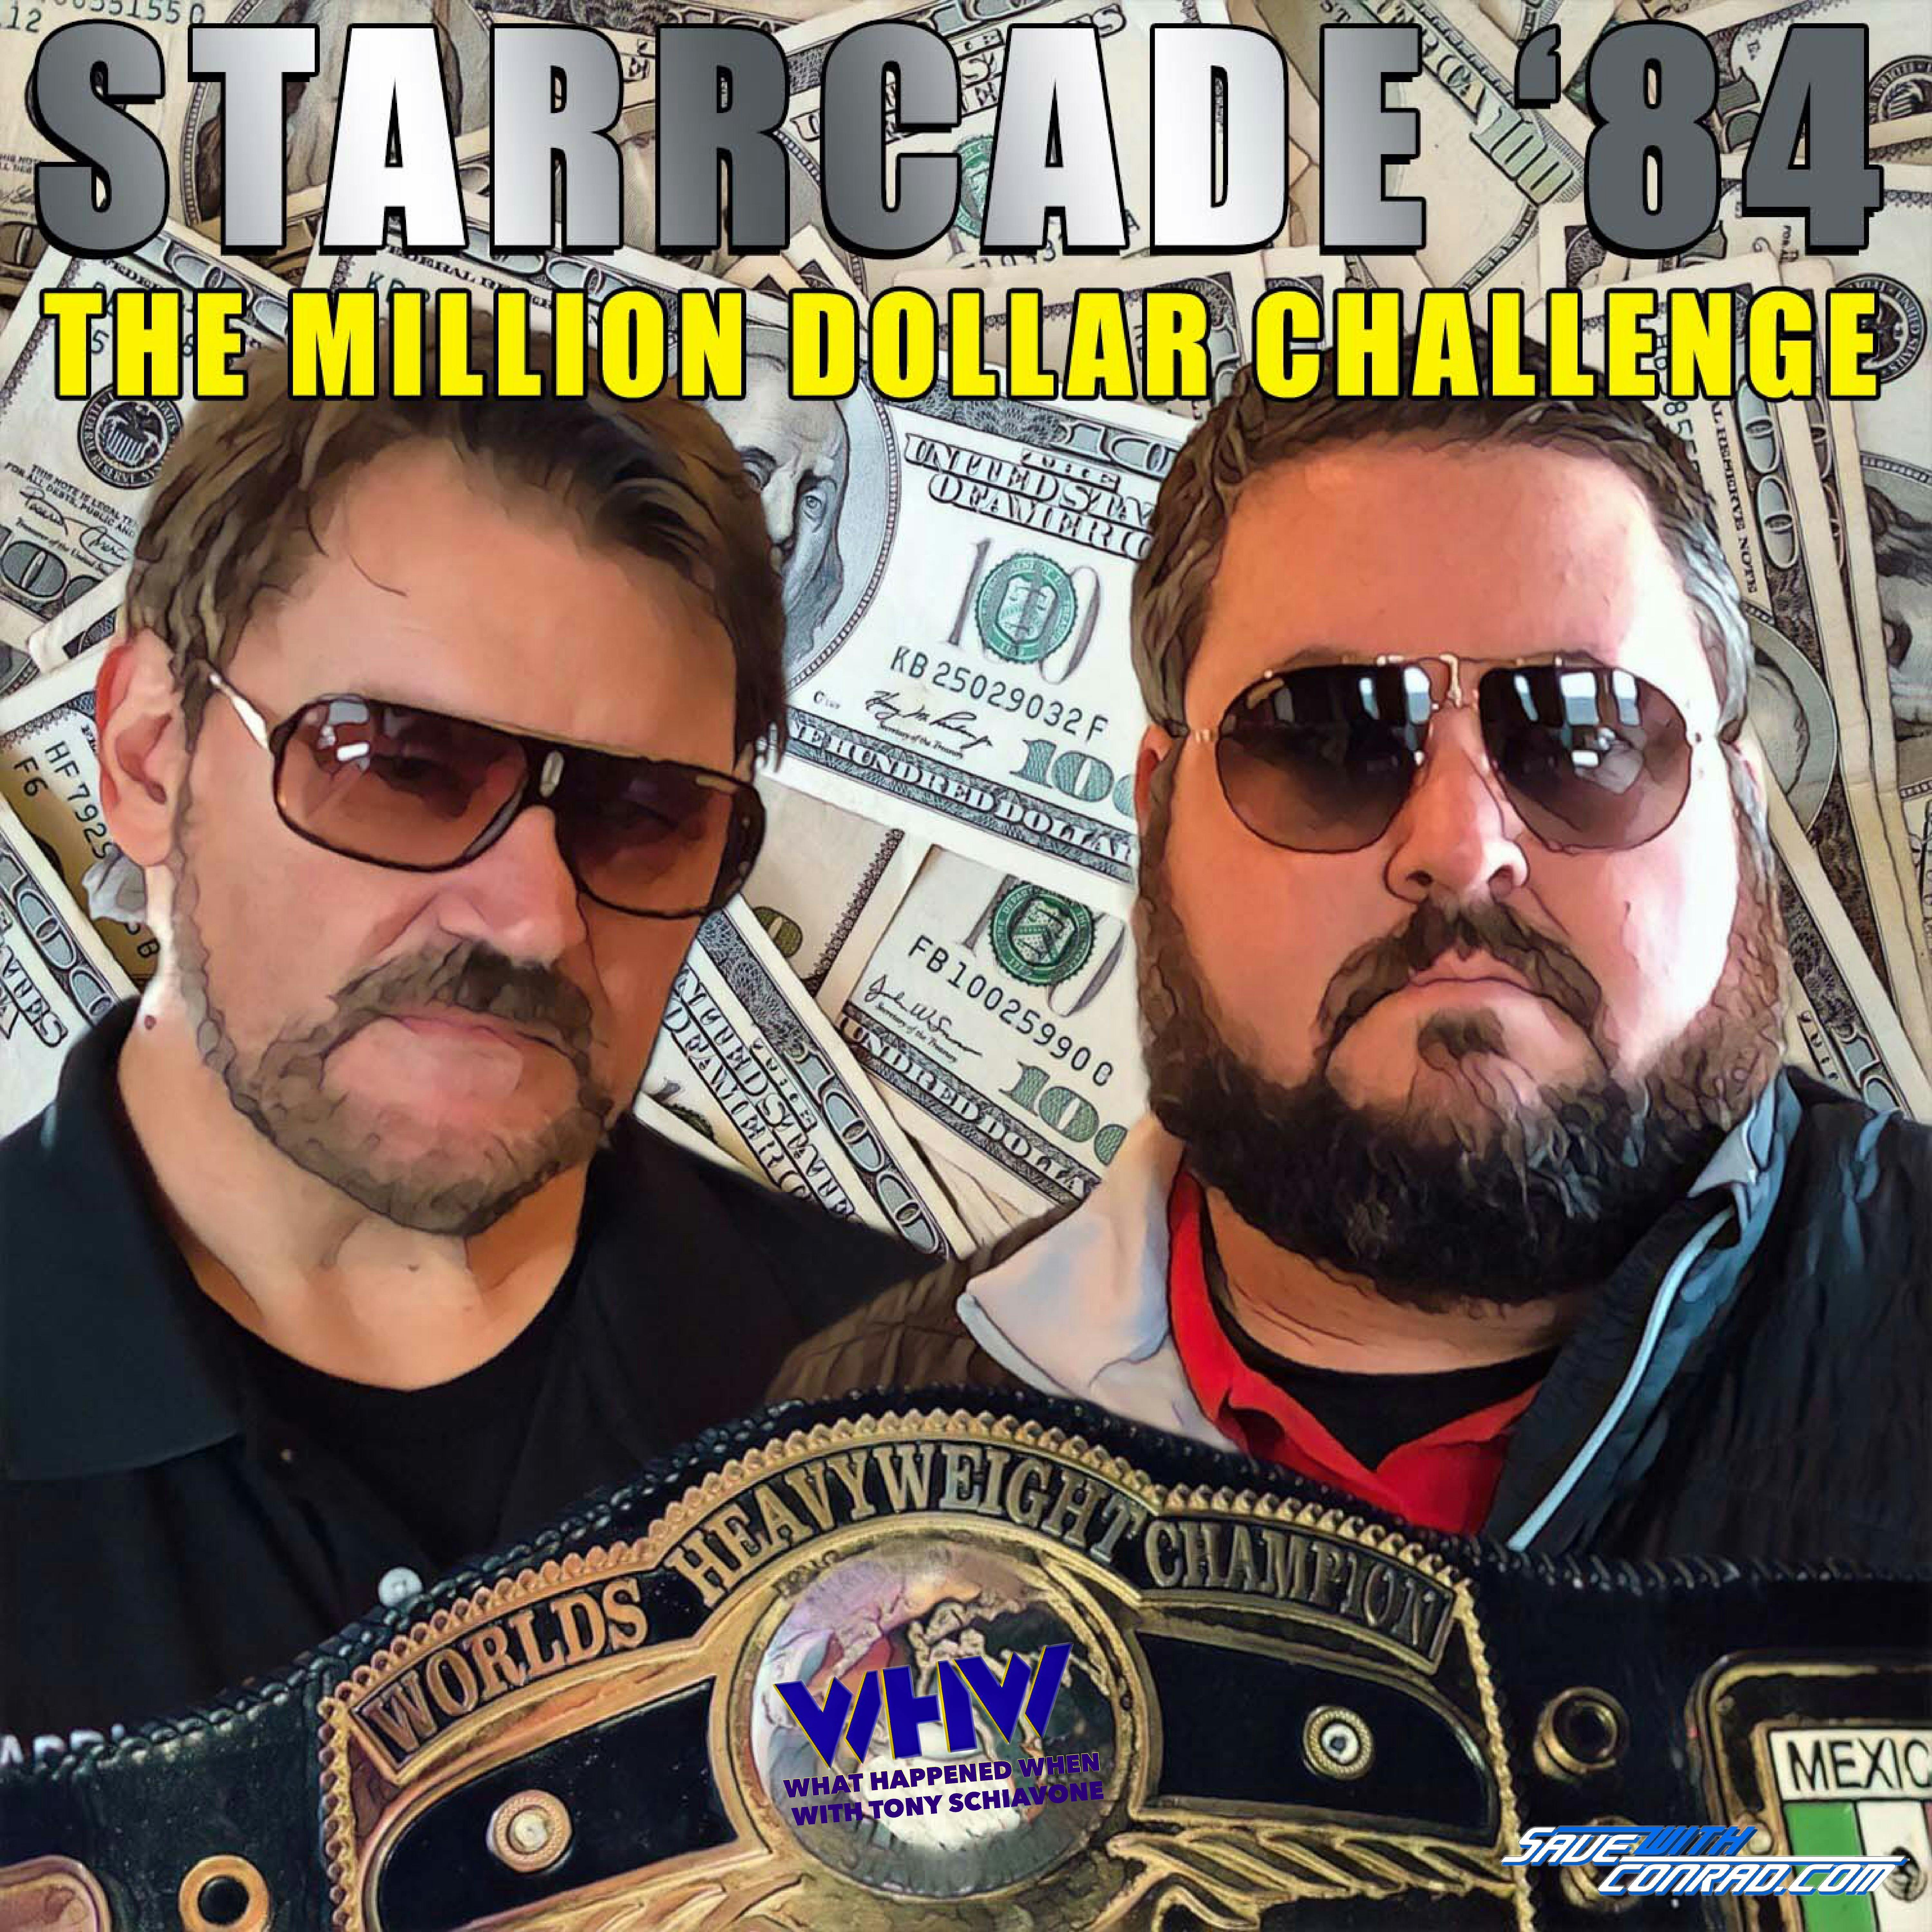 Starrcade '84 The Million Dollar Challenge